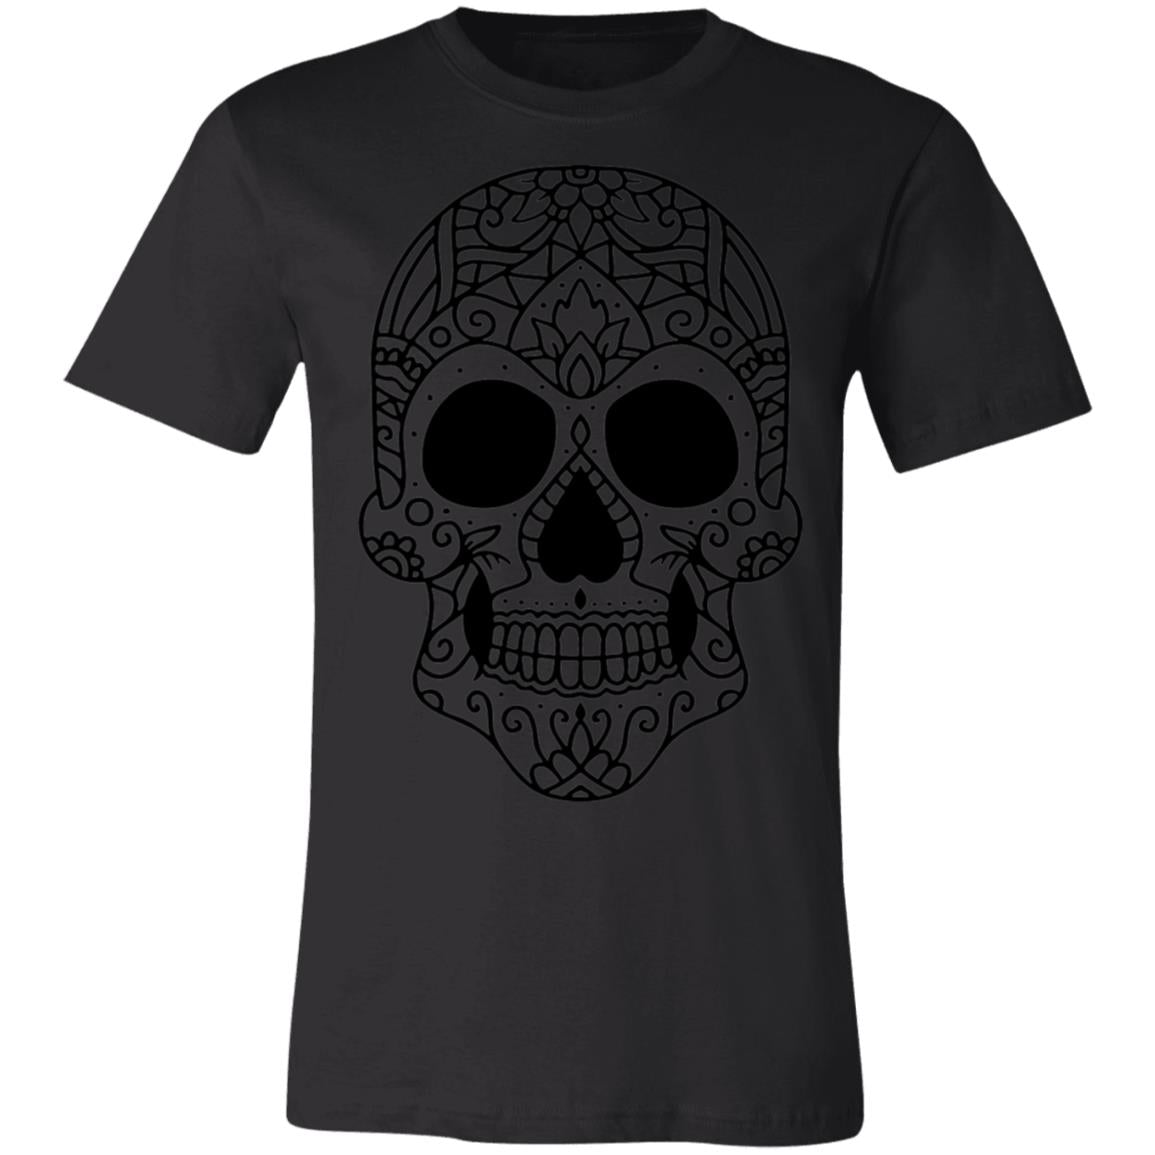 Skull 114 Santa Muerte Shirt-Express Your Love Gifts